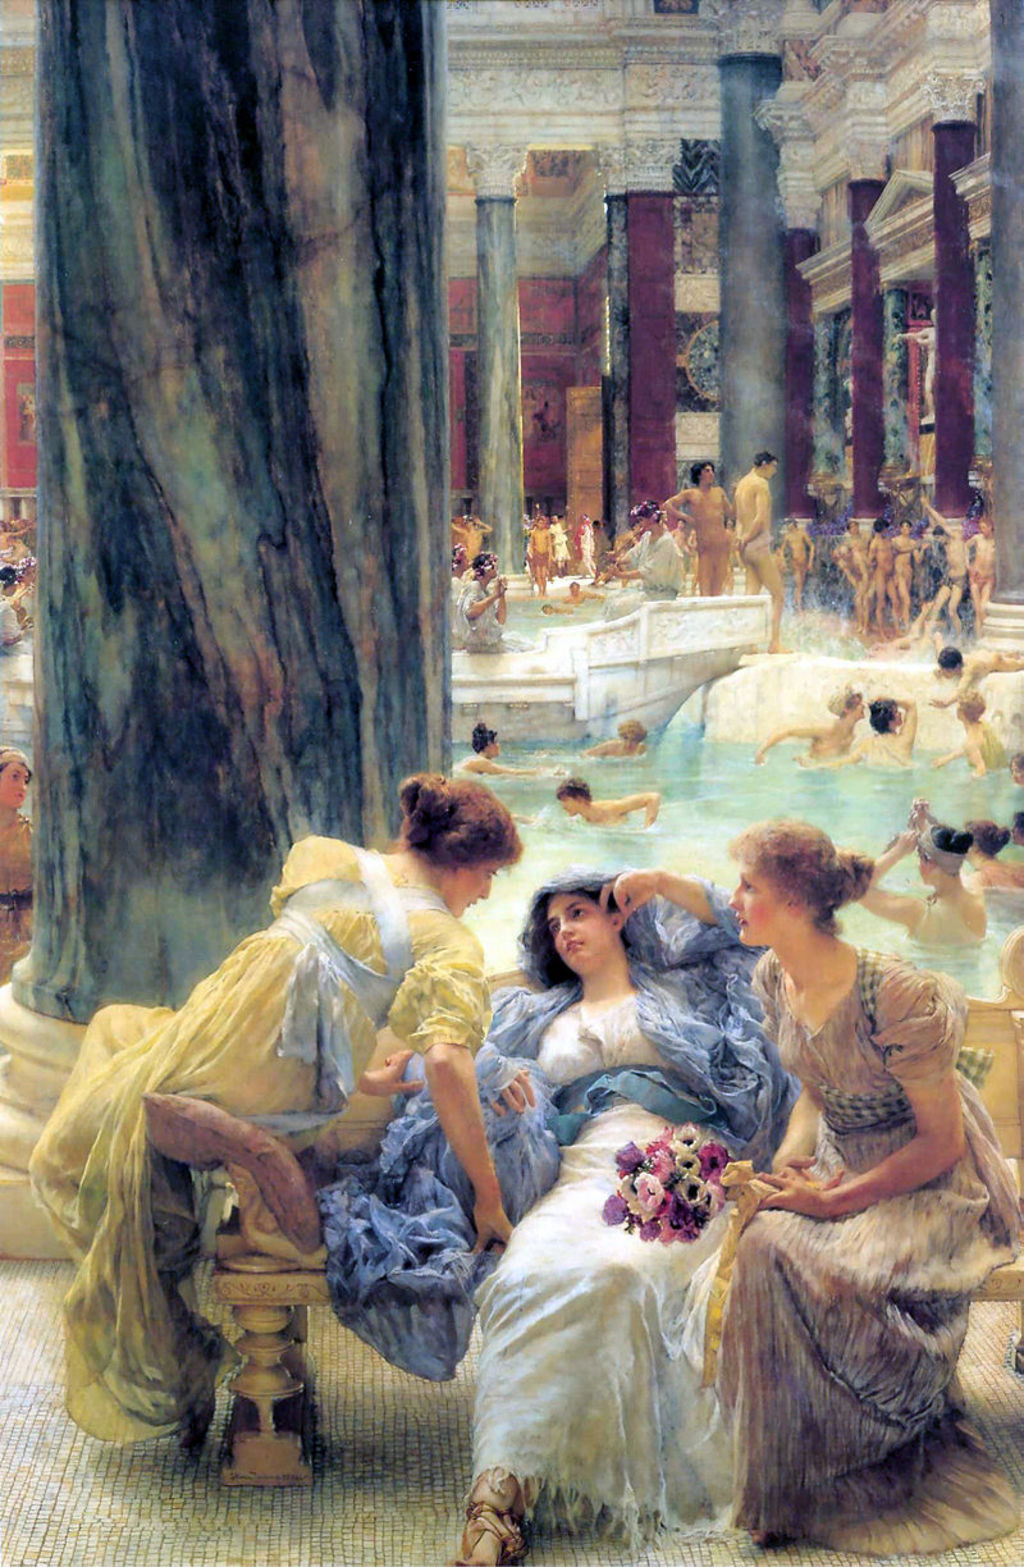 The Baths of Caracalla, 1899 - Sir Lawrence Alma-Tadema